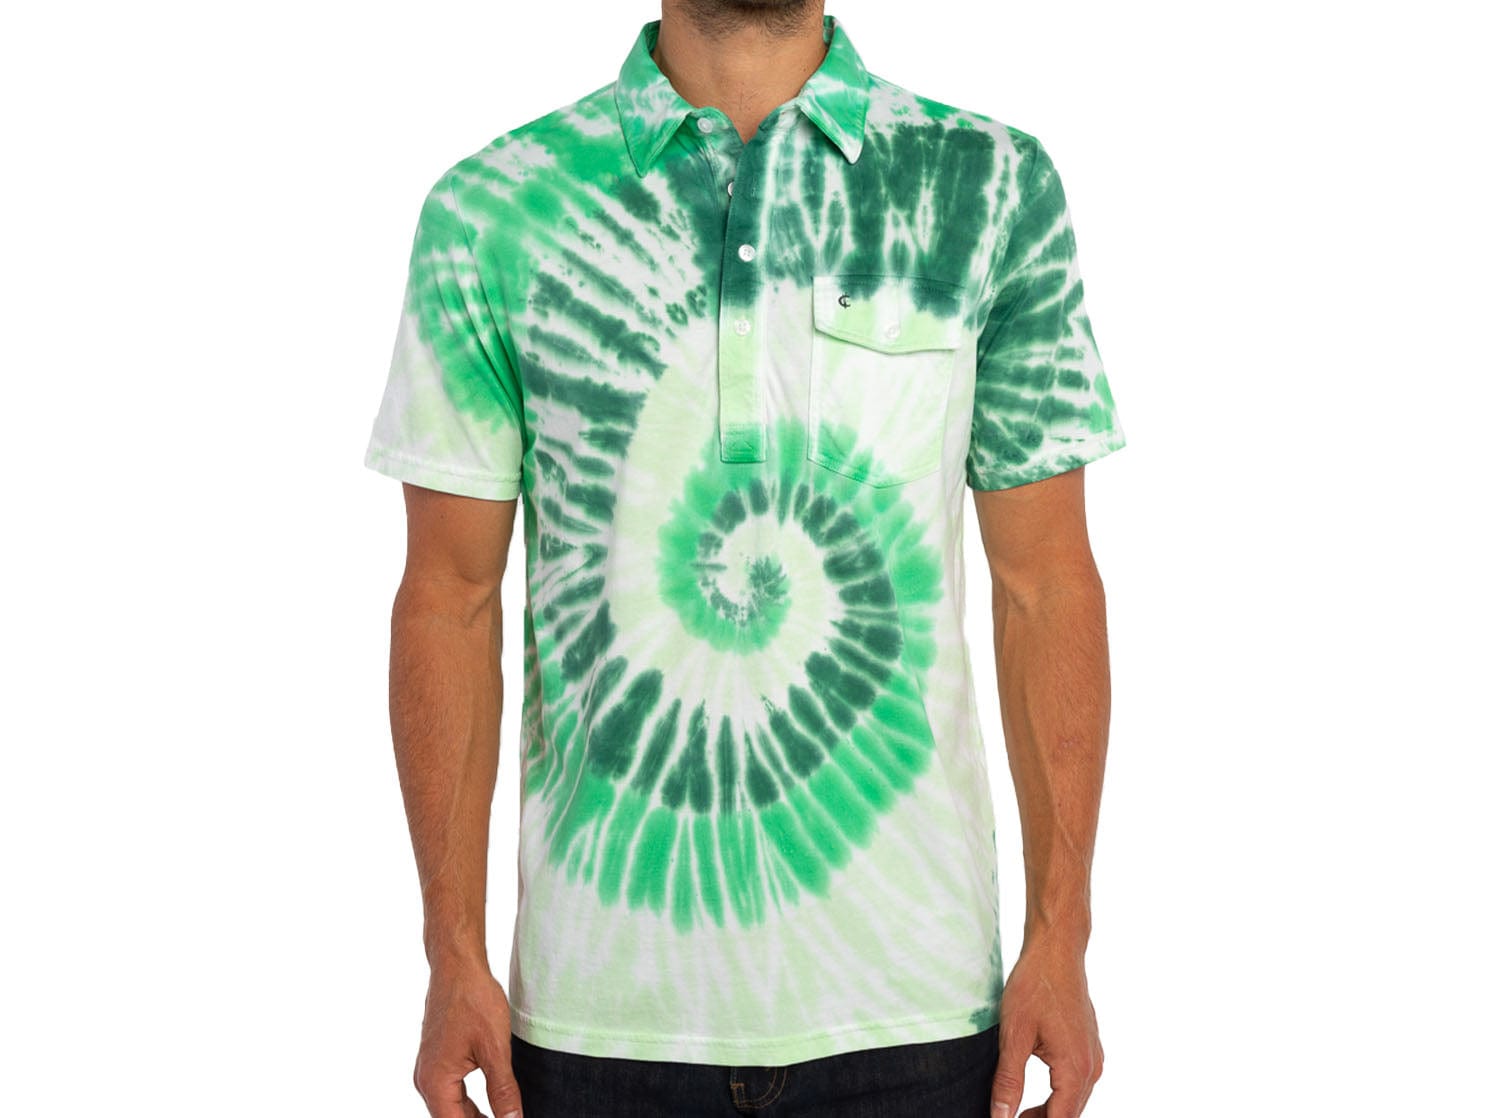 Limited Edition Players Shirt - Irish Green Tie Dye – Criquet Shirts